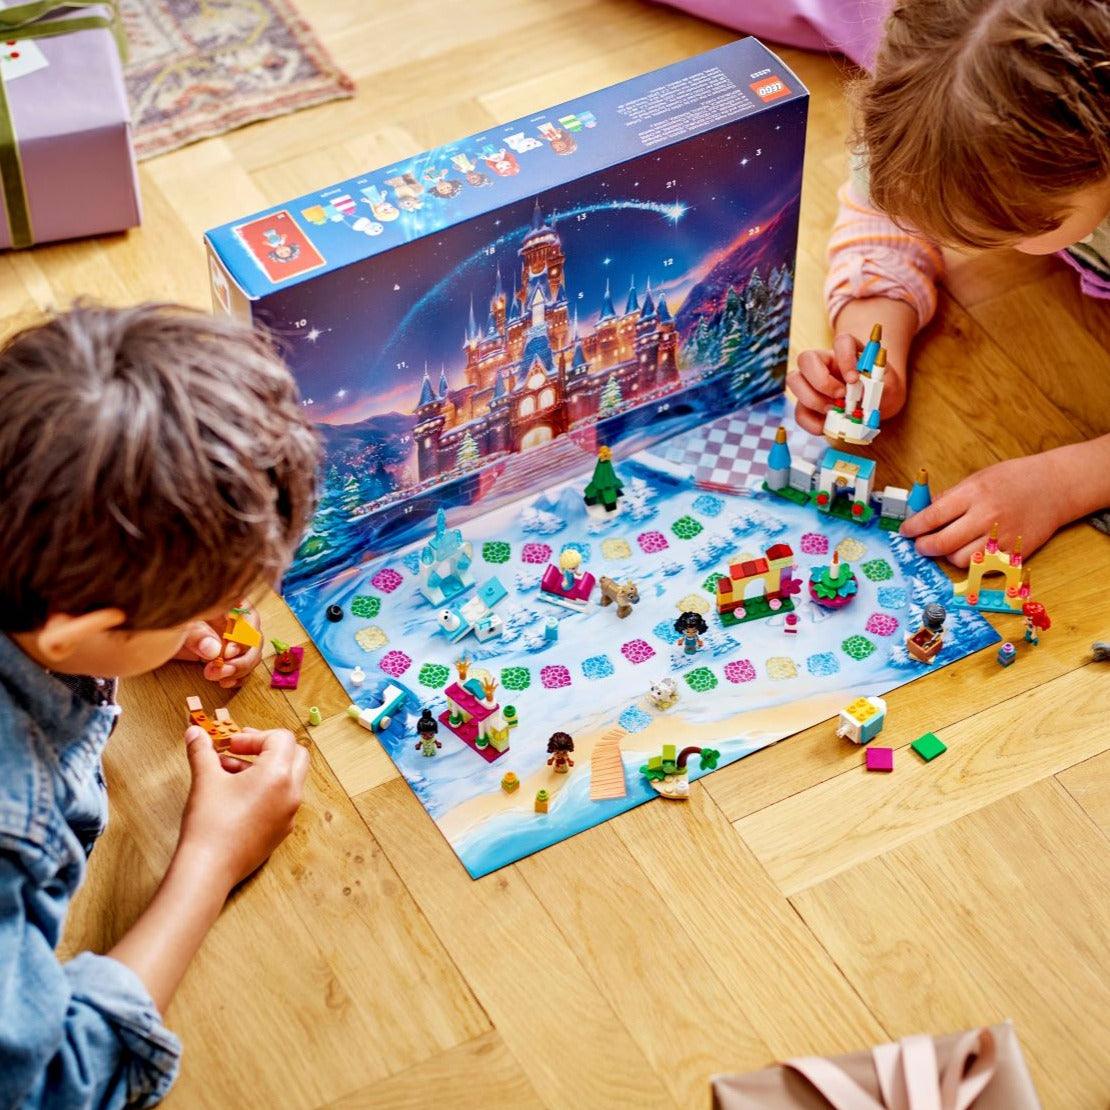 LEGO Adventkalender 2024 43253 Disney (Pre-Order: verwacht september) LEGO DISNEY @ 2TTOYS LEGO €. 29.49